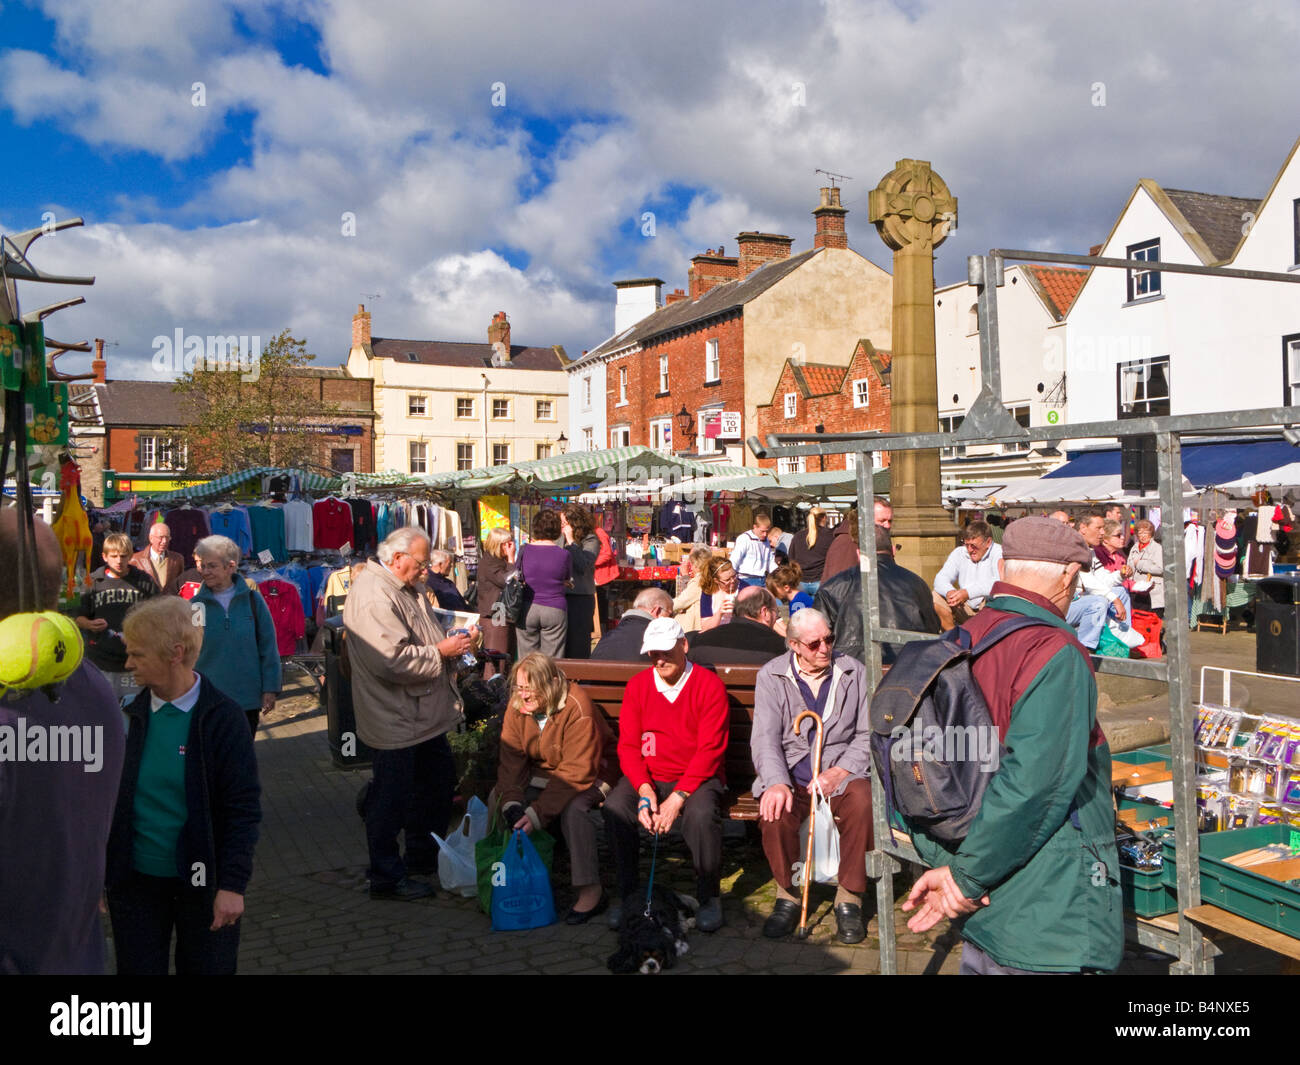 Market stalls street scene in the Market Place at Knaresborough, North Yorkshire, England, UK Stock Photo